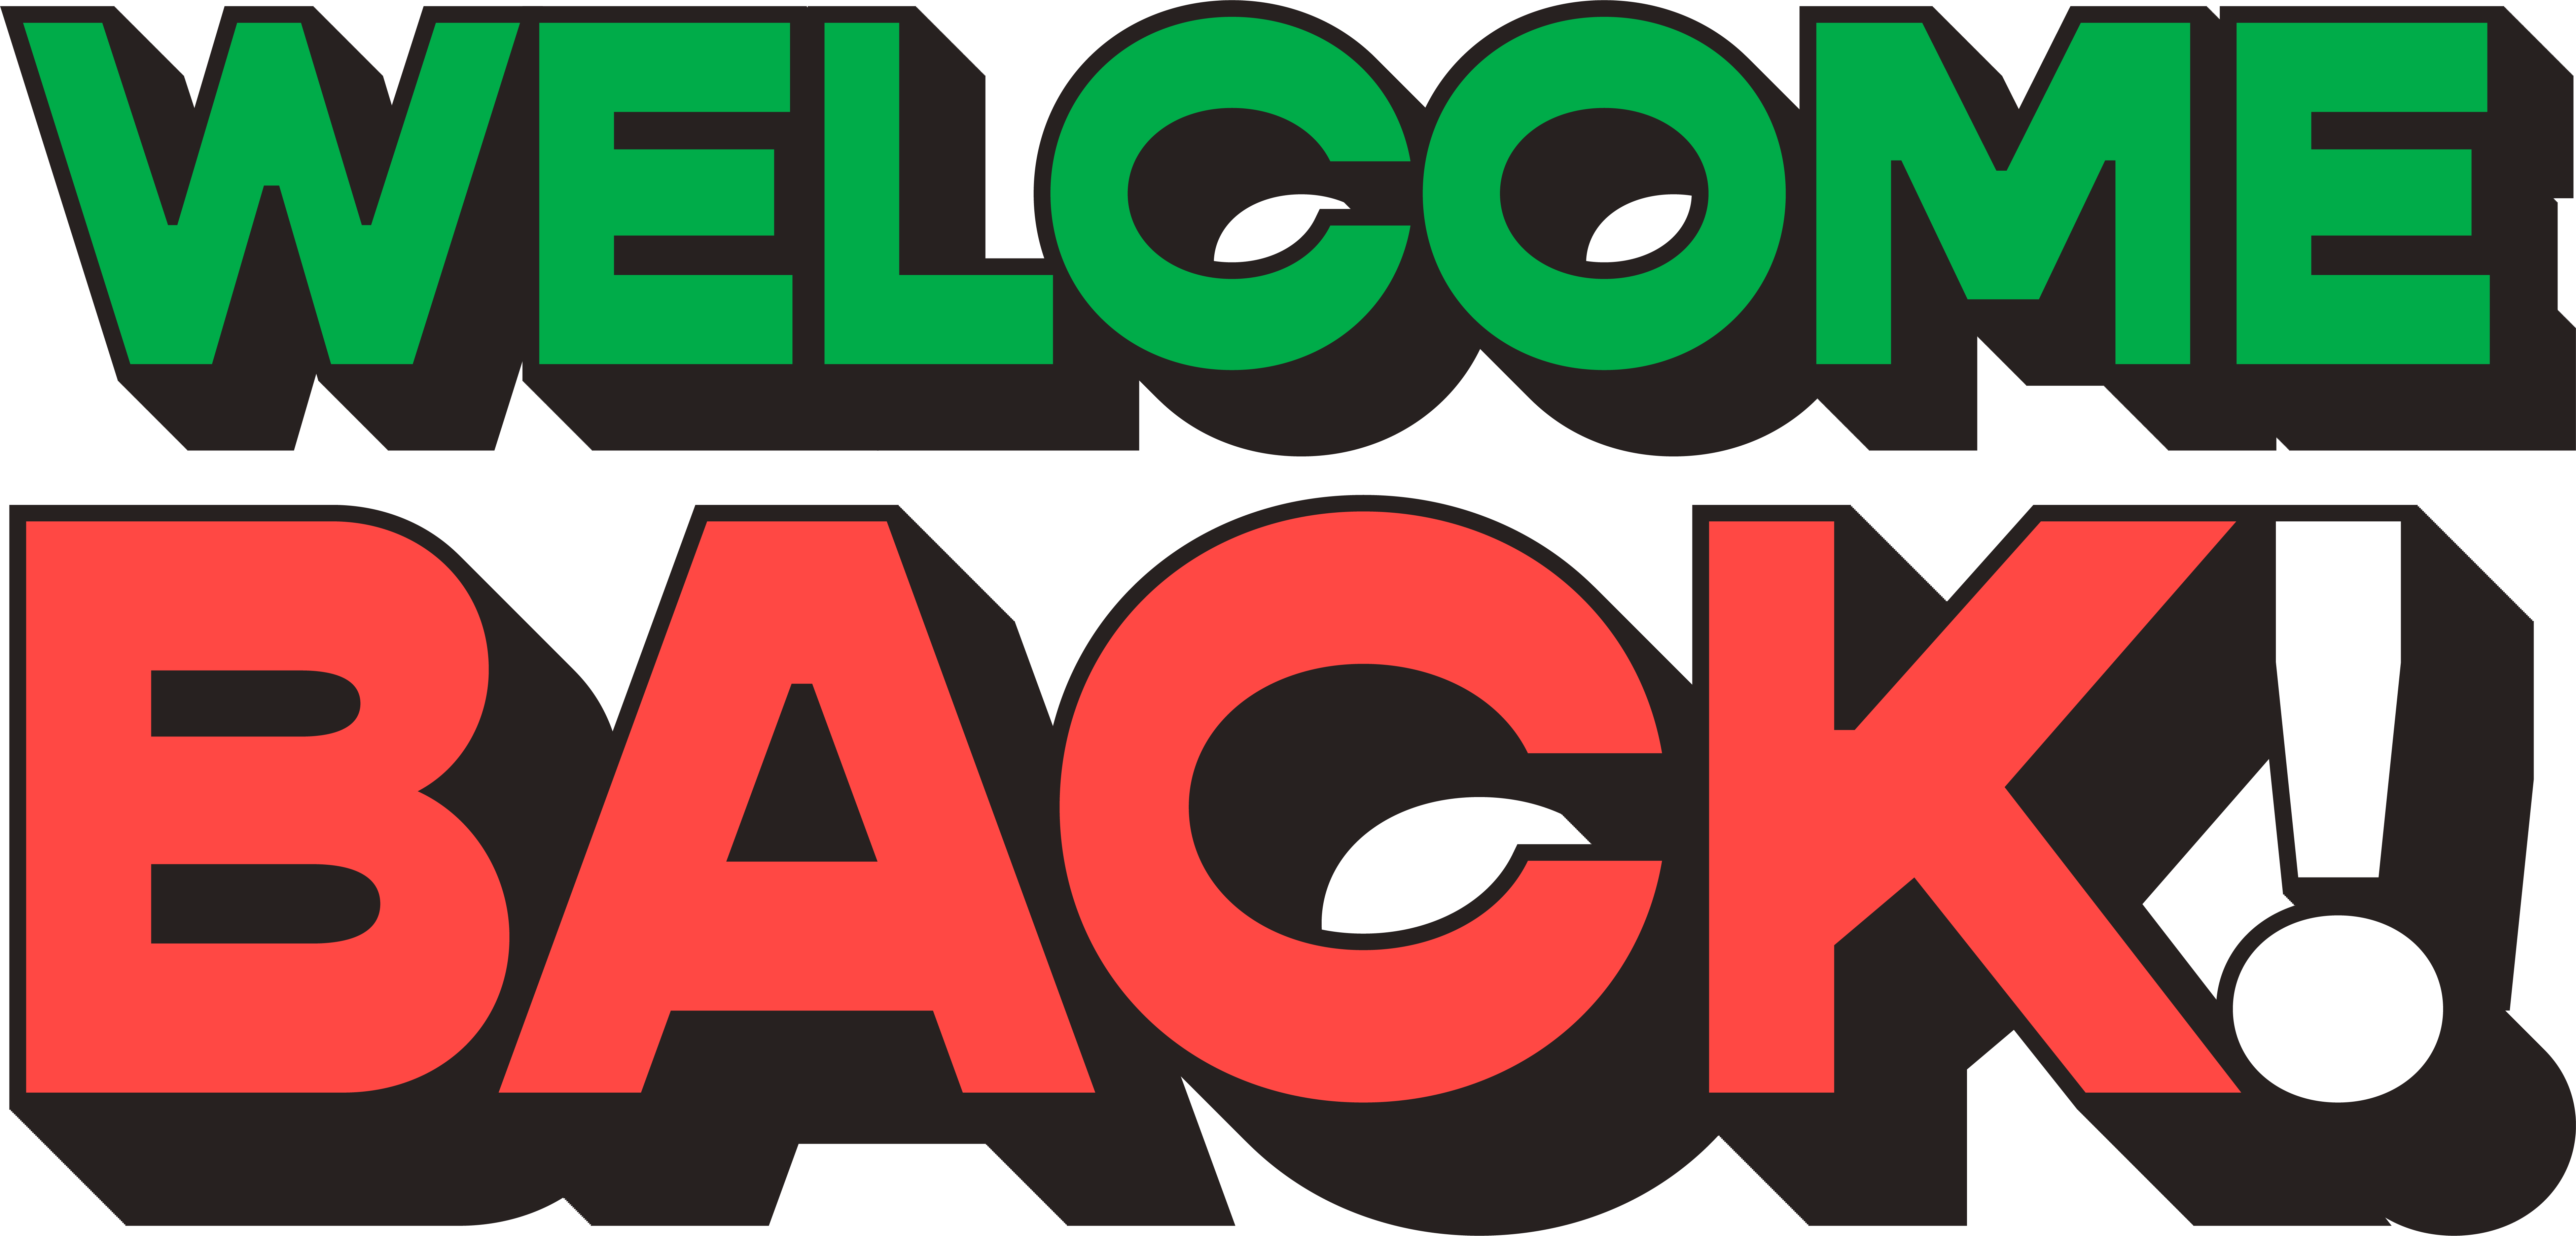 Welcome Back logo